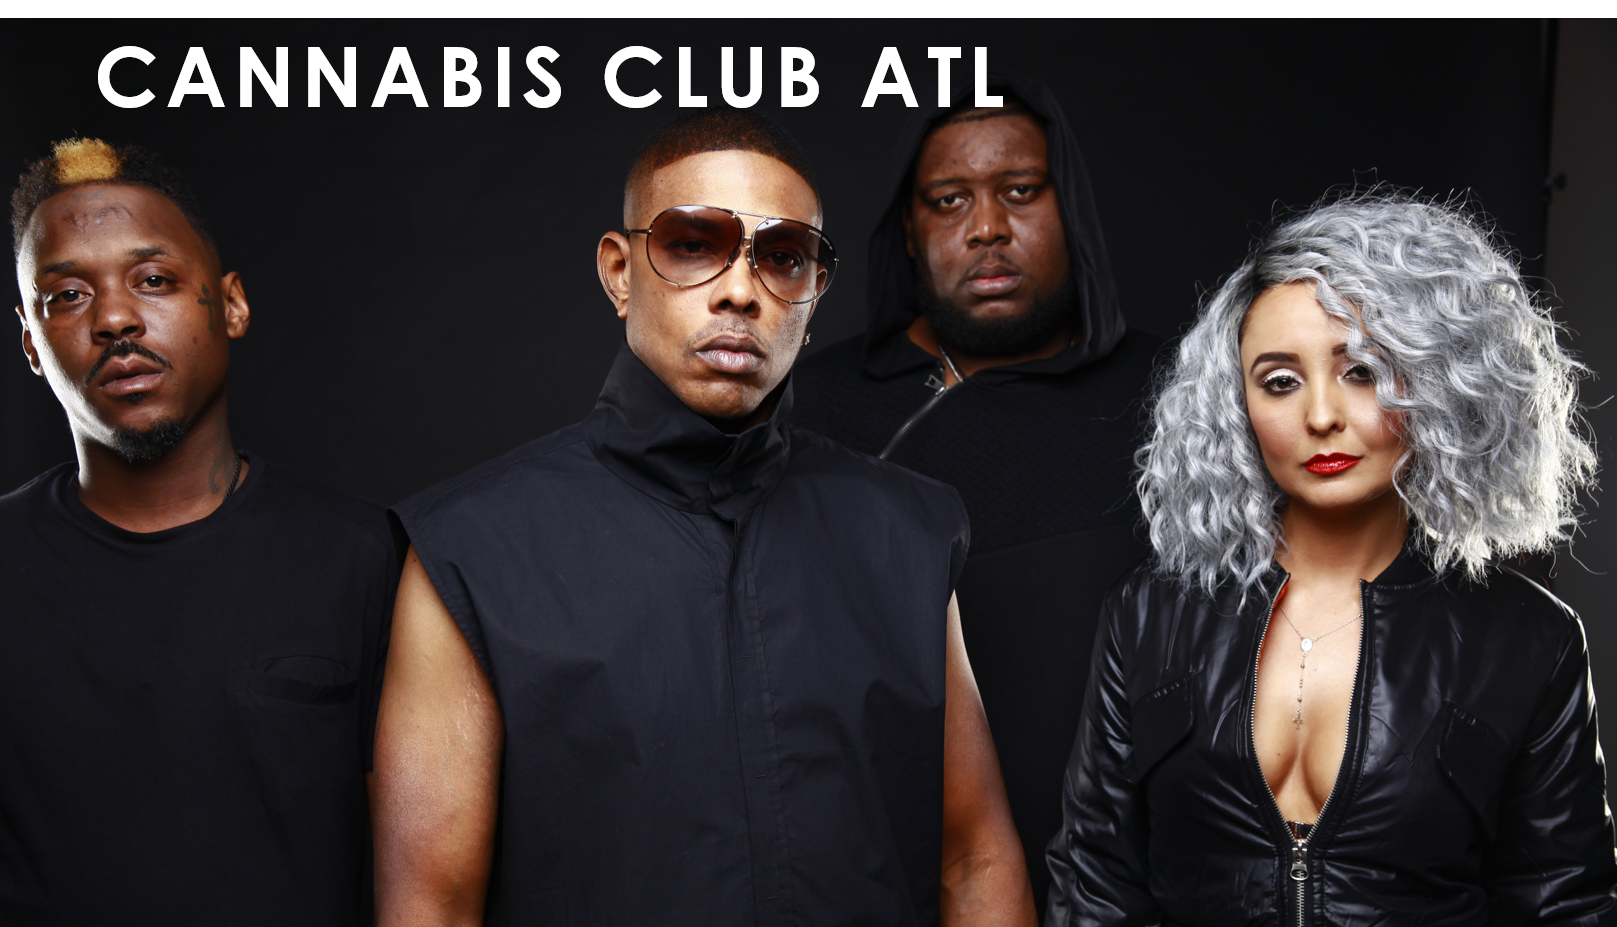 Atlanta based recording artists Cannabis Club ATL